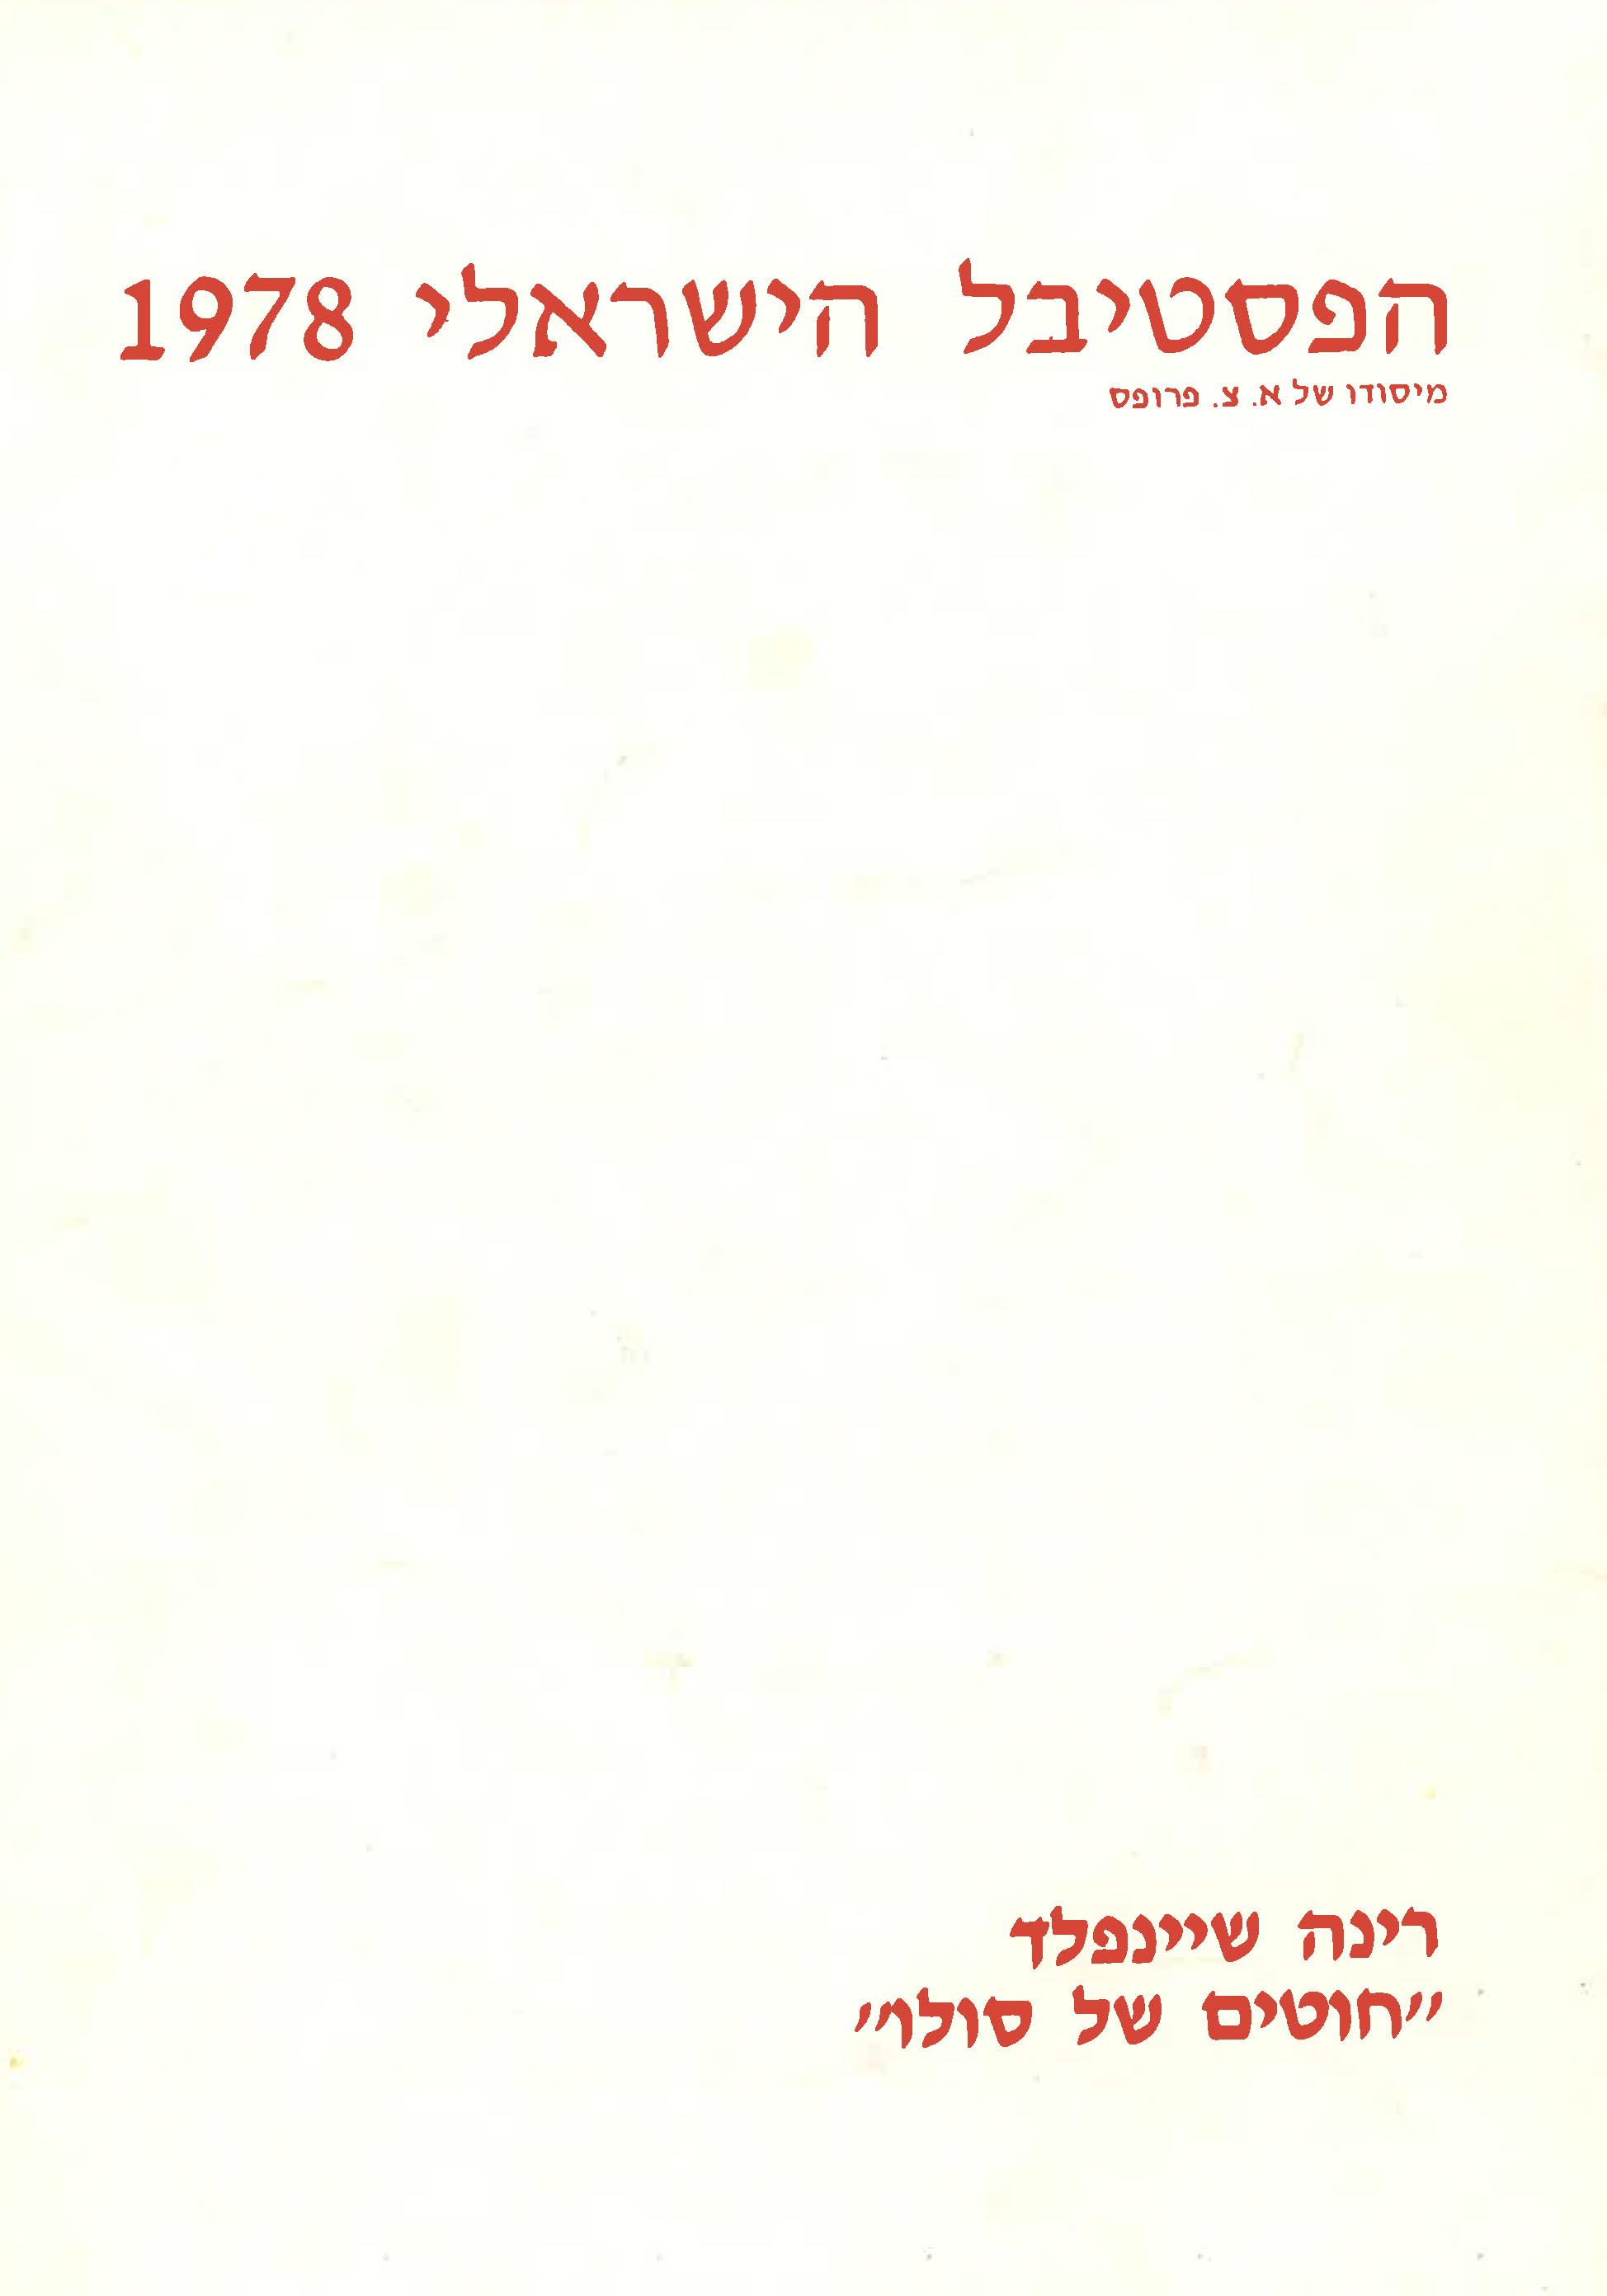 PROGRAMME THE FESTIVAL OF ISRAEL HEBREW COVER  .jpg